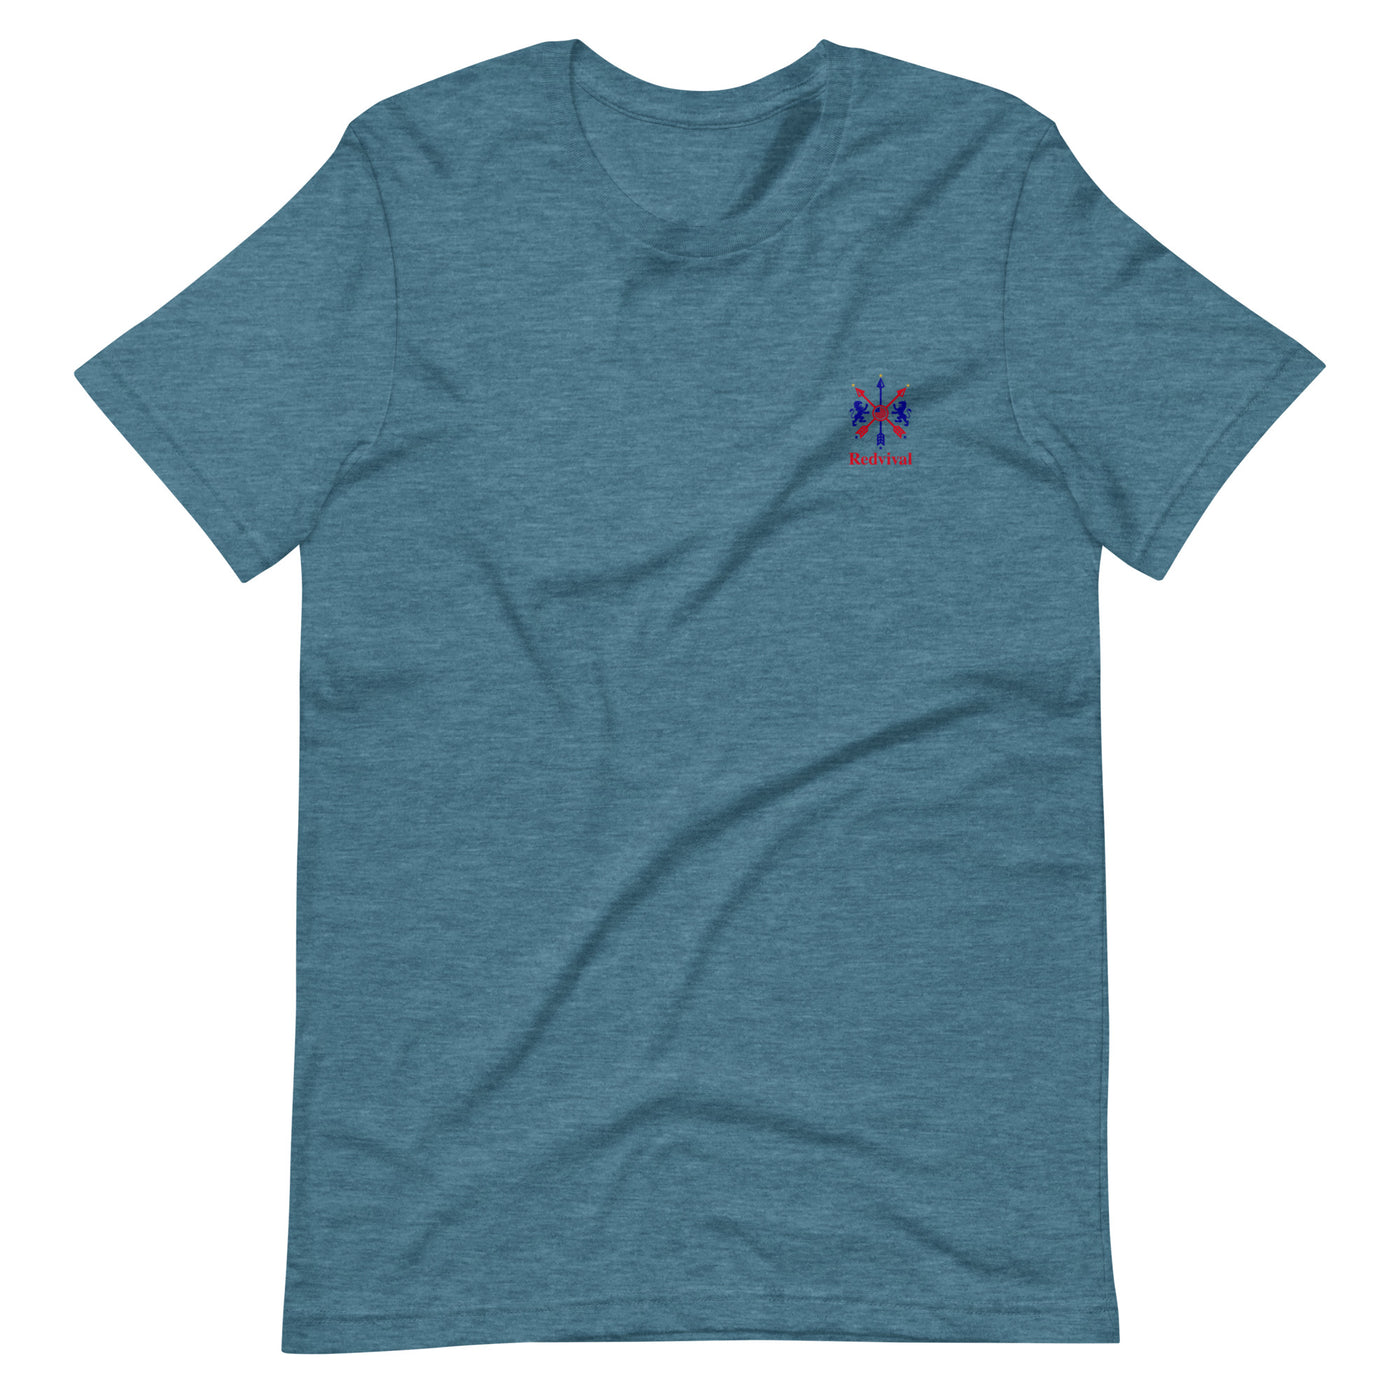 Mahi - Unisex t-shirt